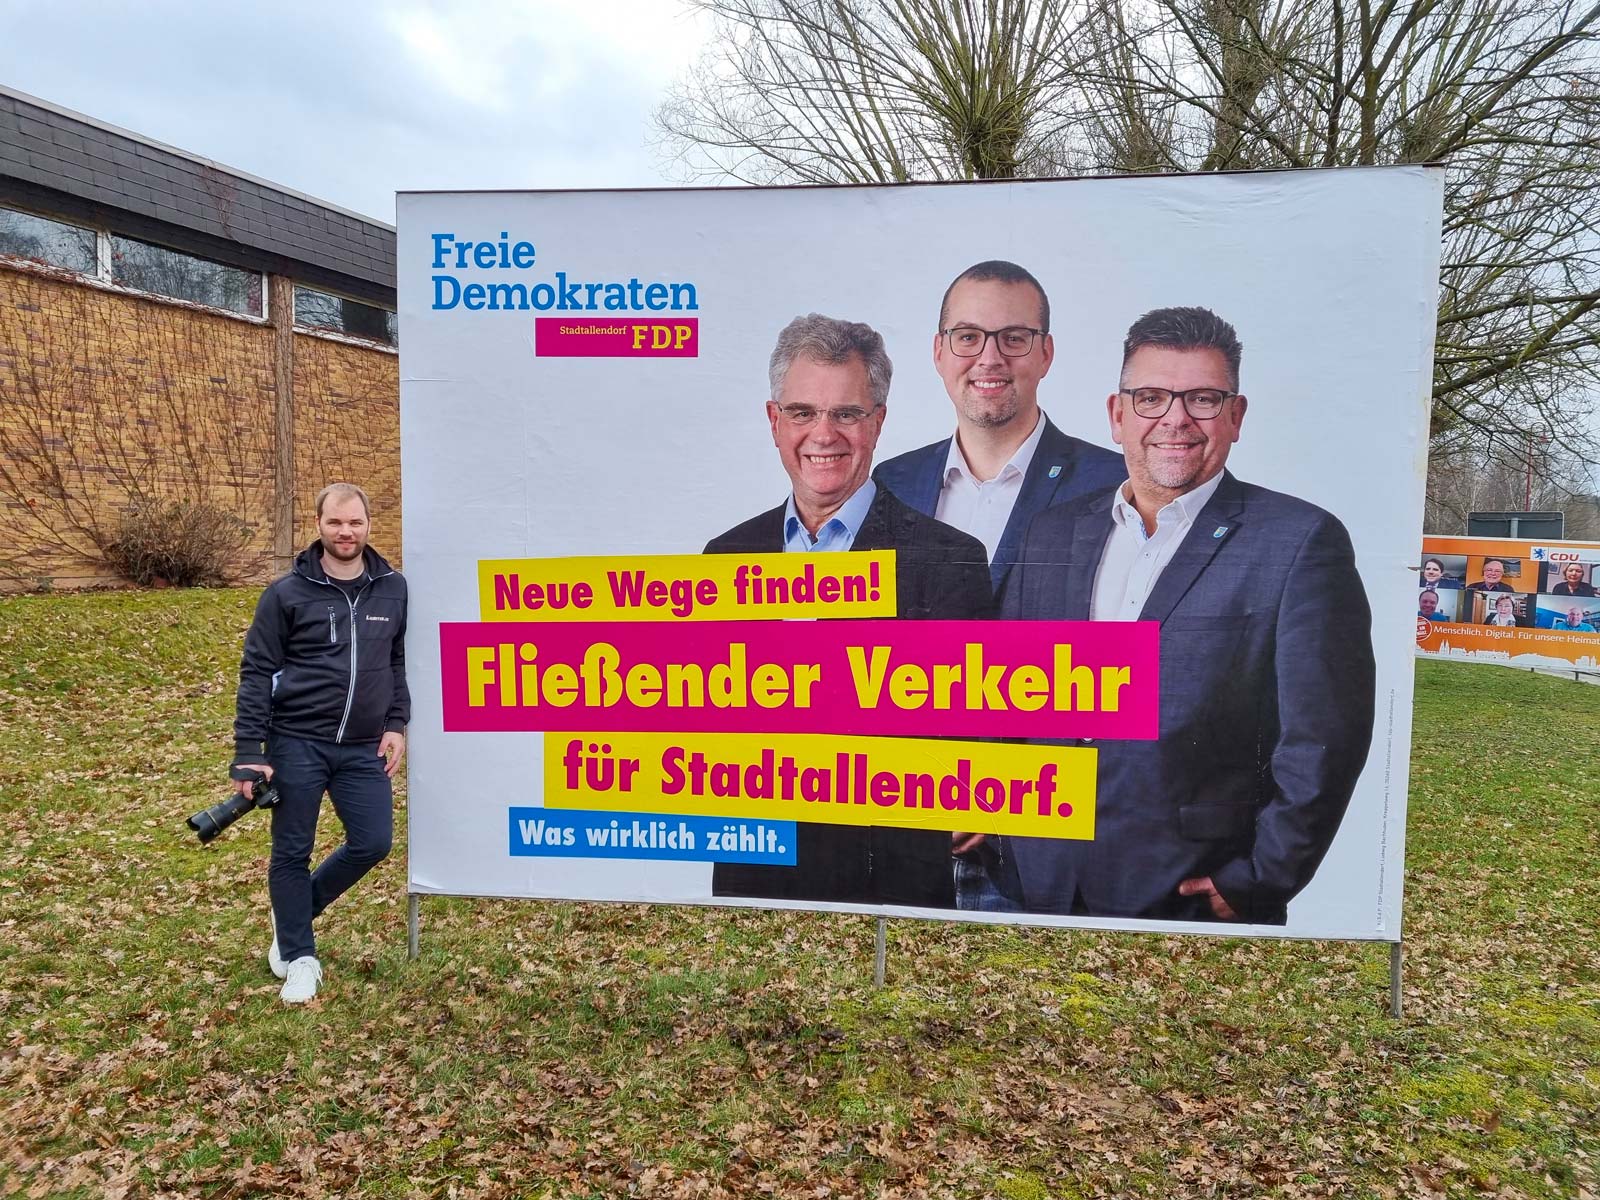 FDP Stadtallendorf winand koch dominik runge thomas seinsoth